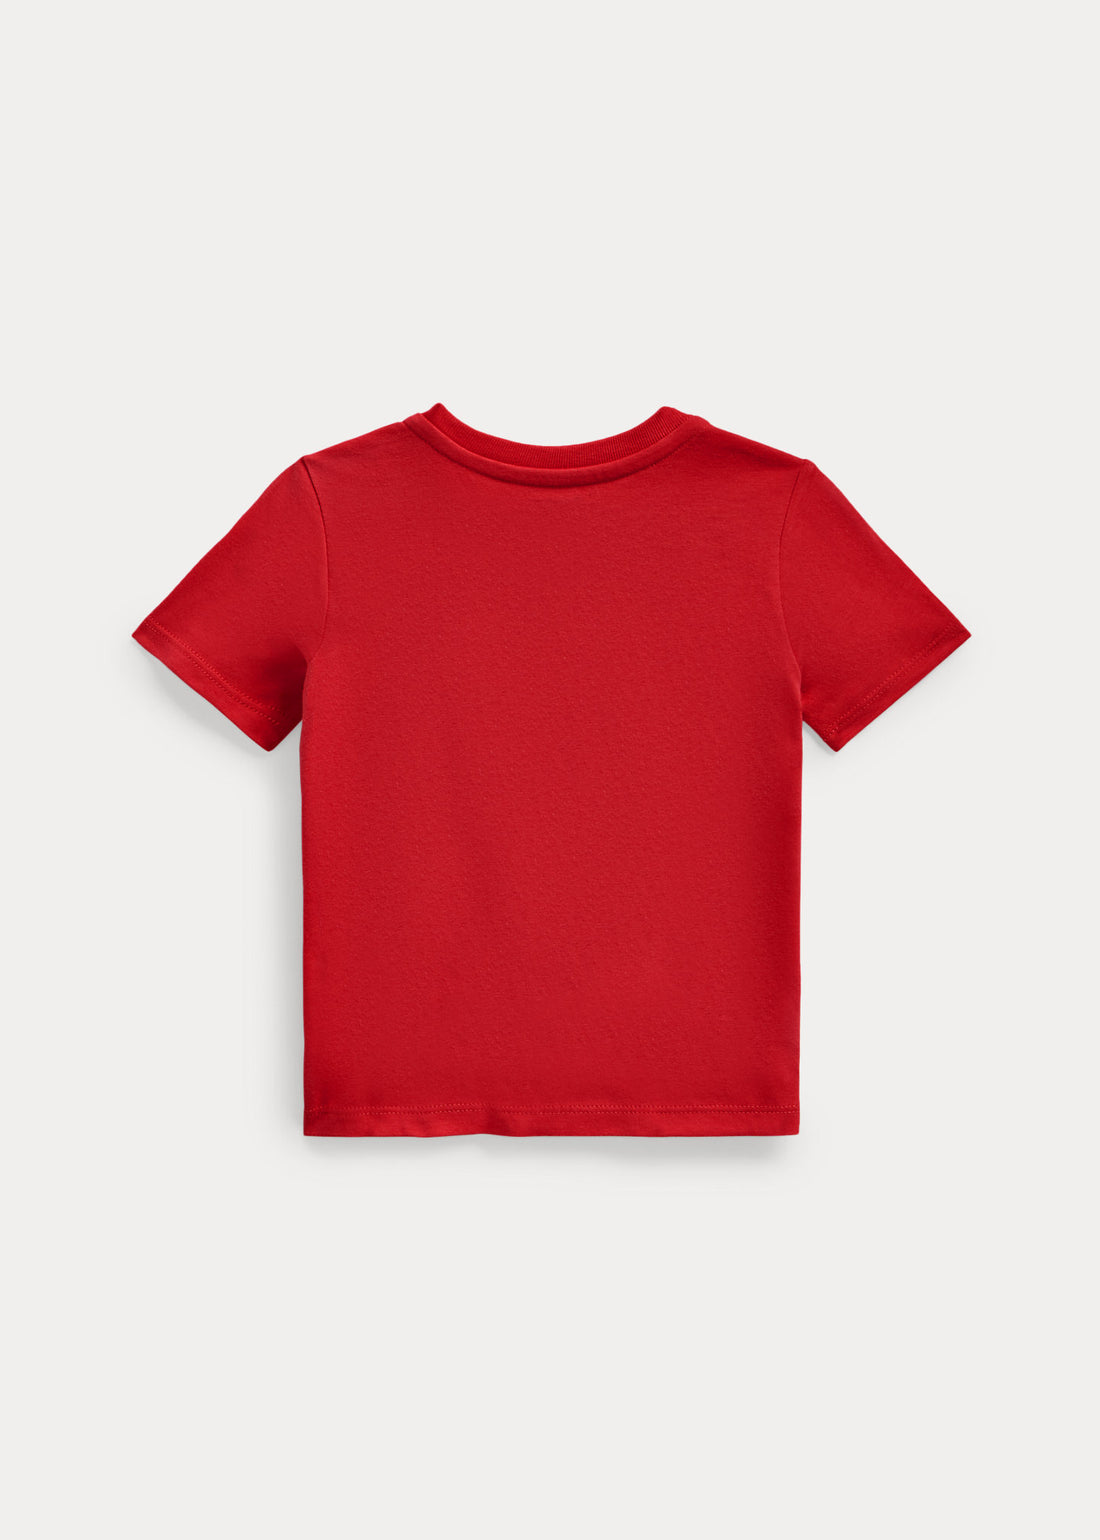 Camiseta Roja Básica Manga Corta Bebé